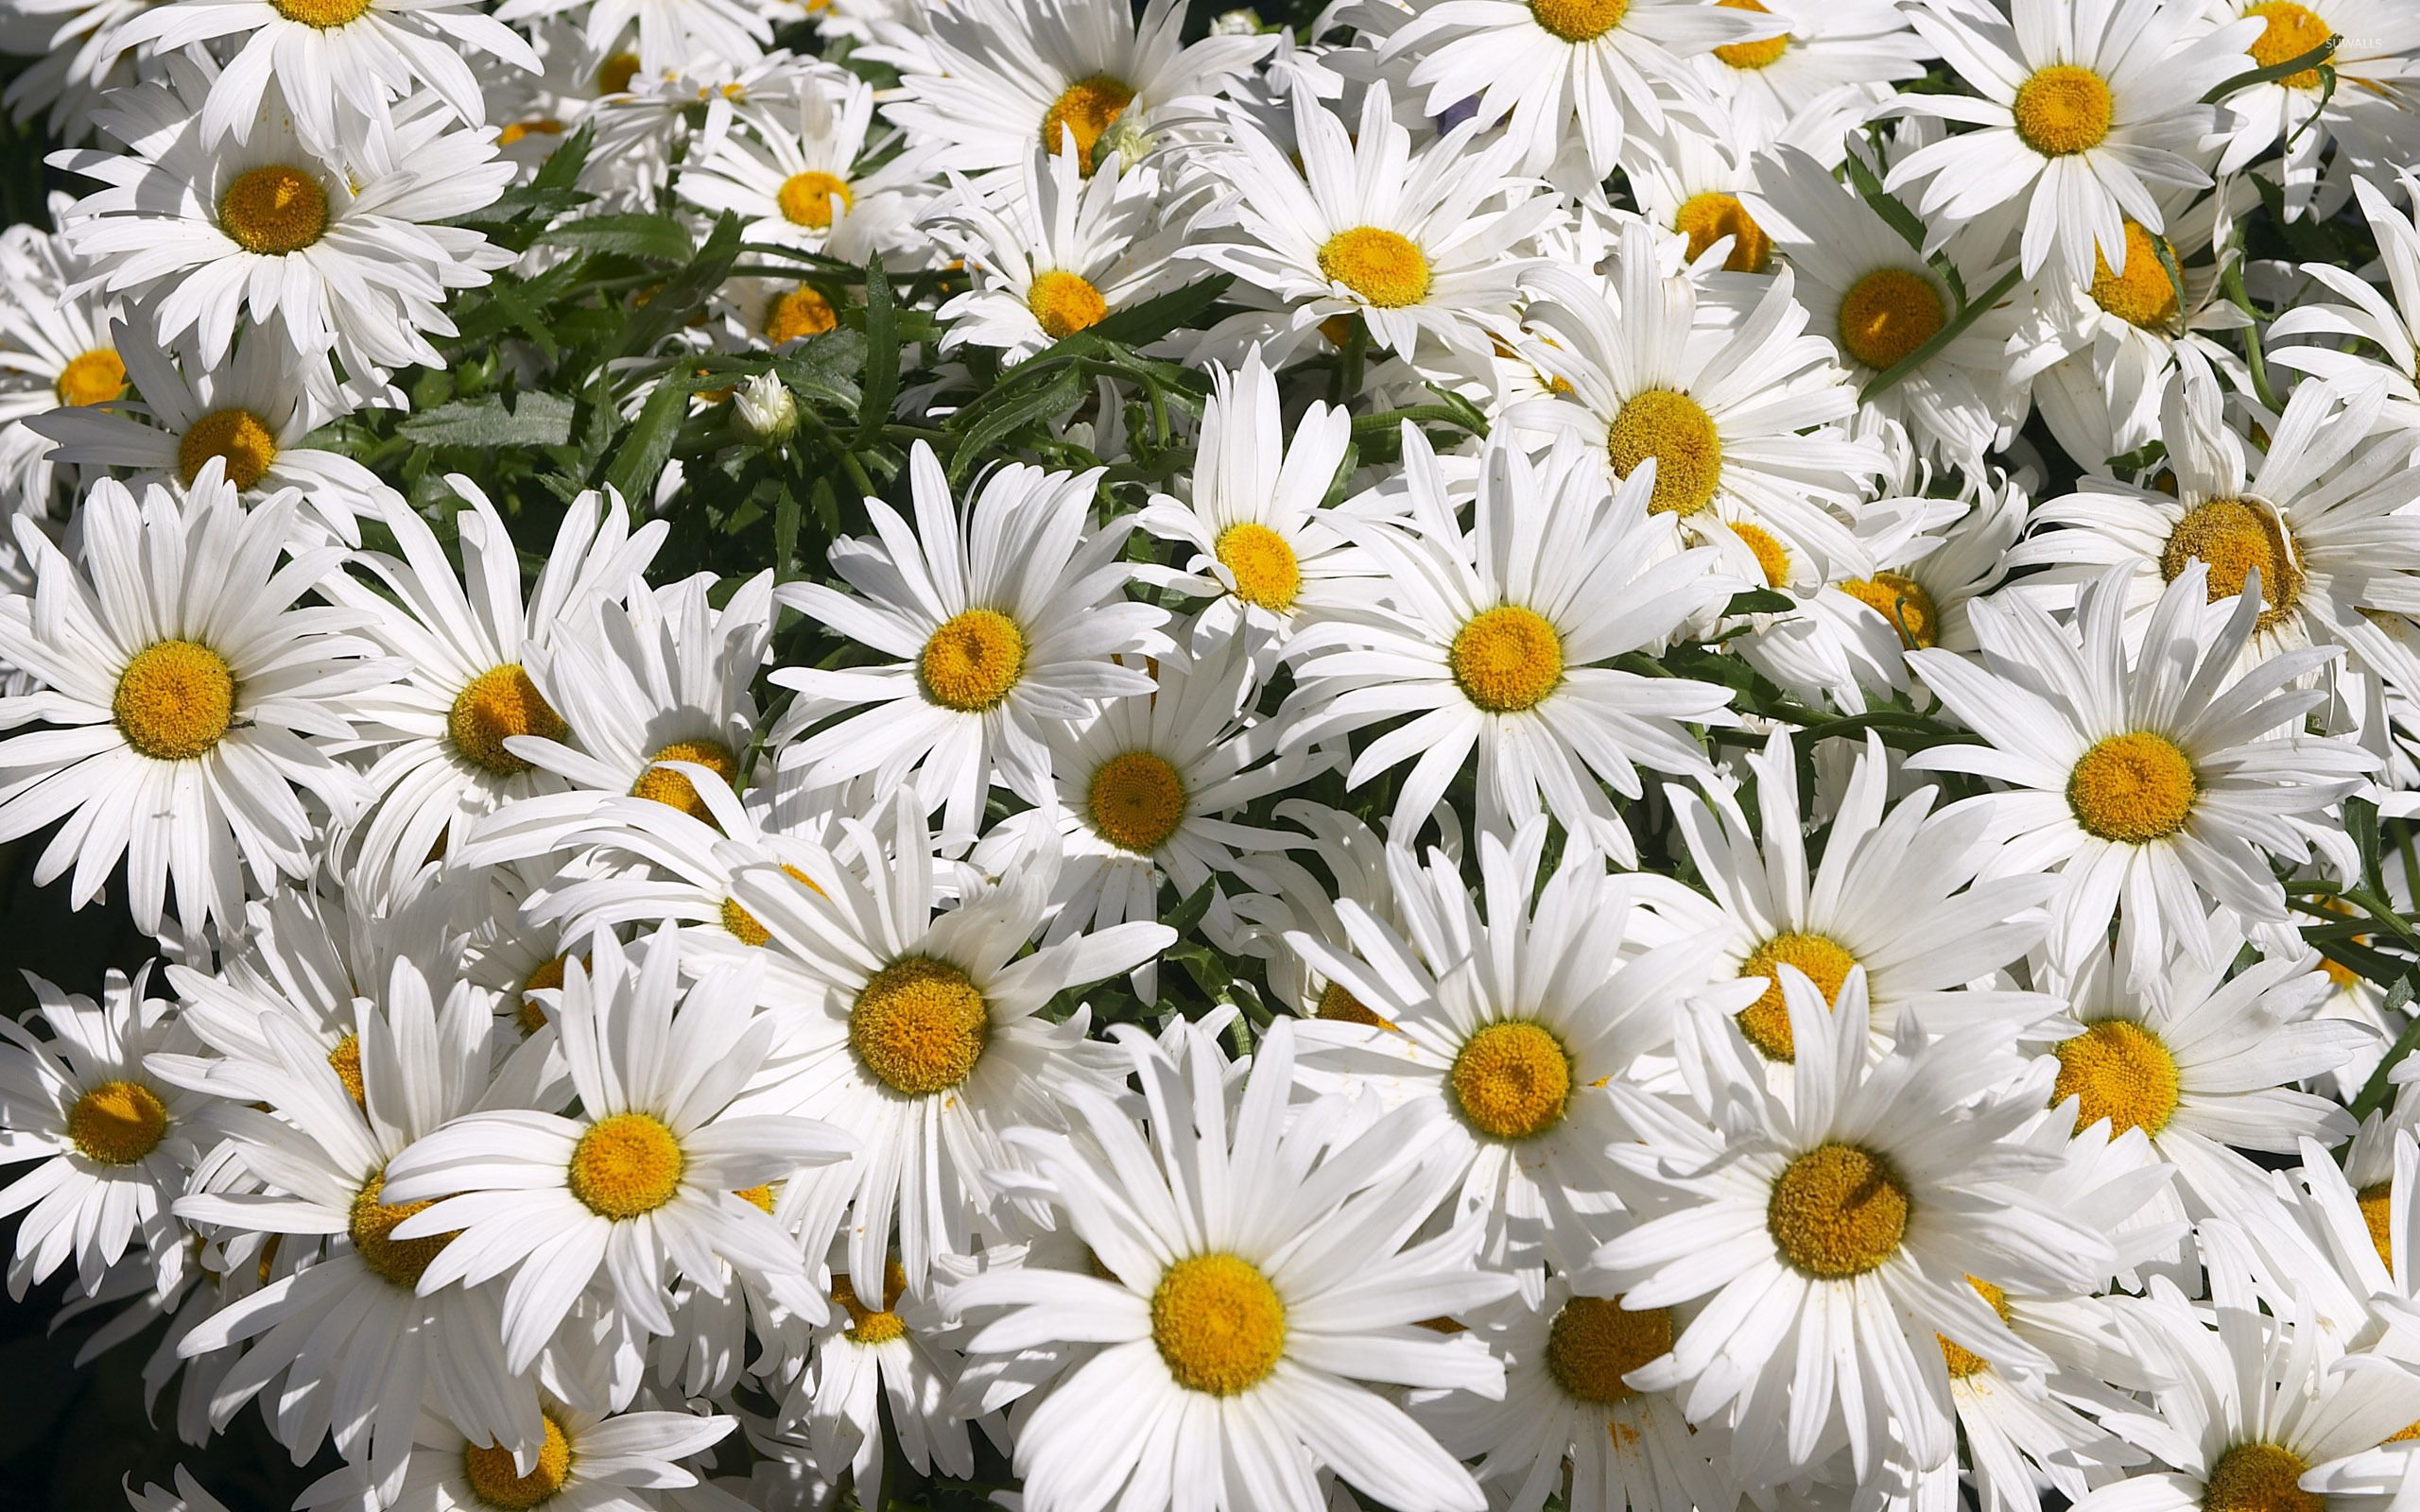 Daisy wallpaper - Fondos de flores - # 5291